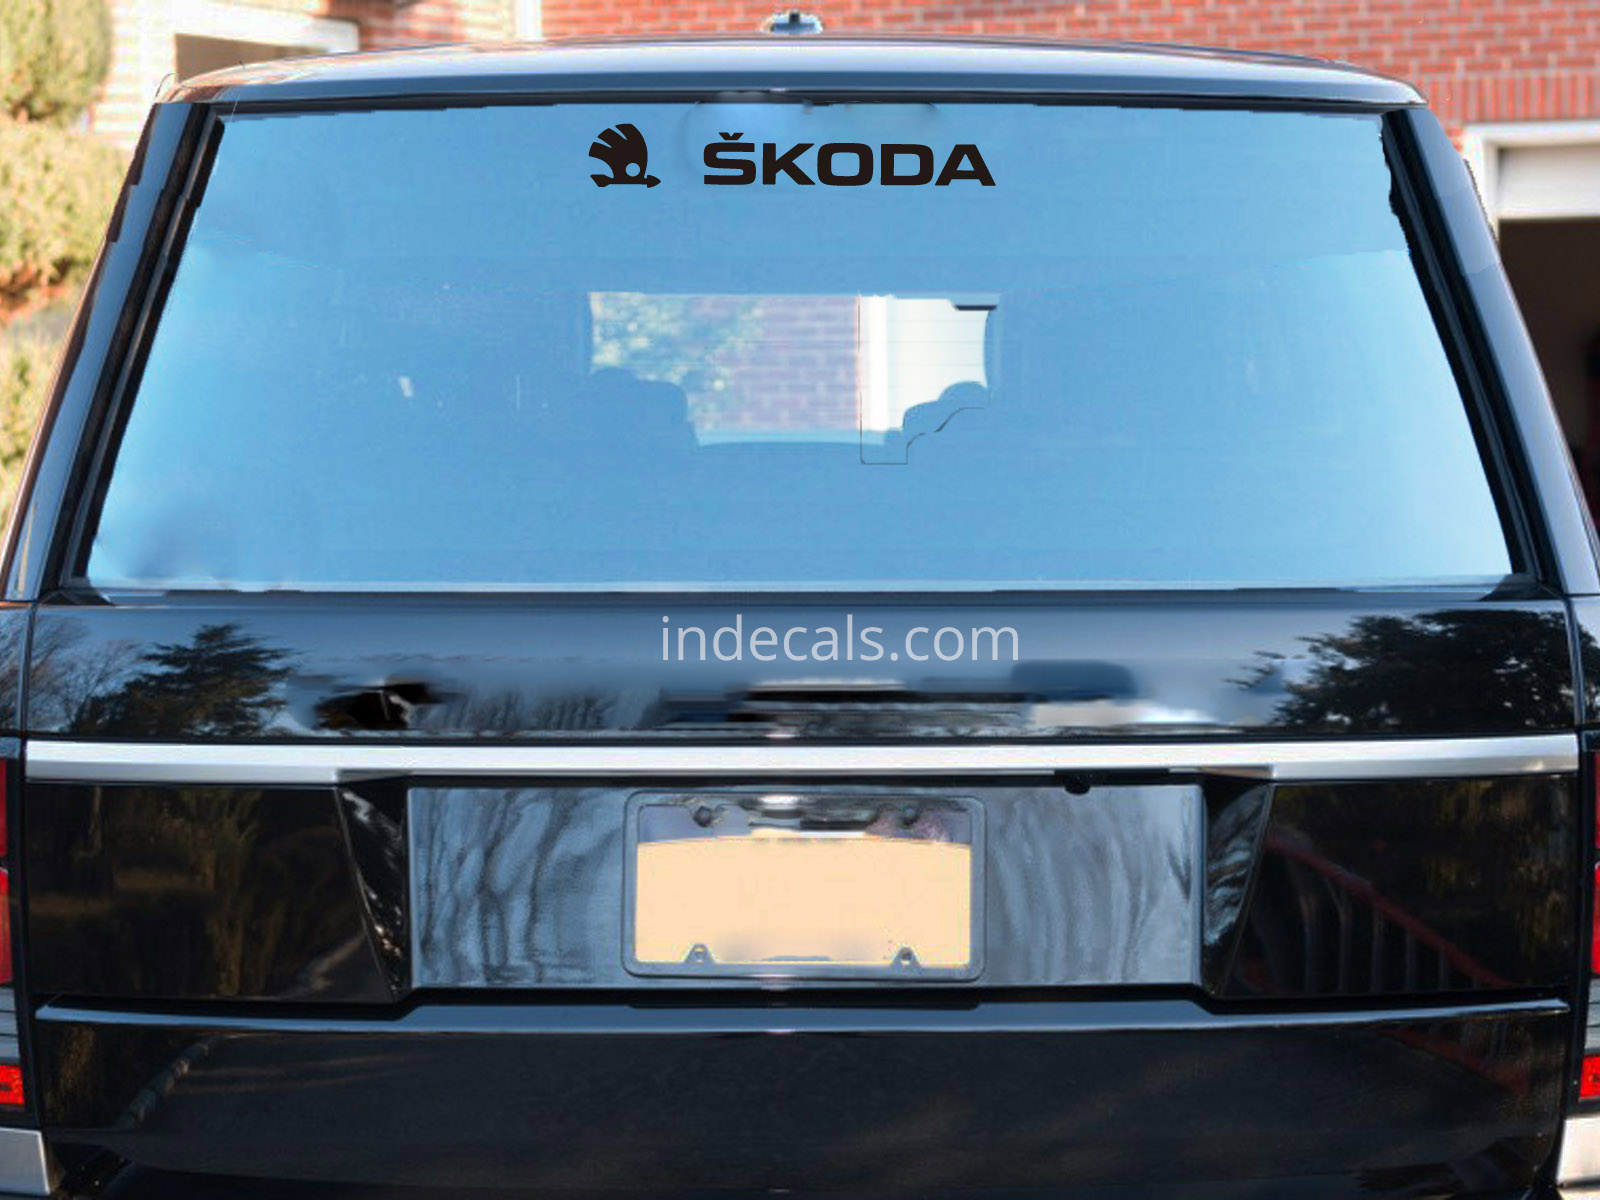 1 x Skoda Sticker for Windshield or Back Window - Black